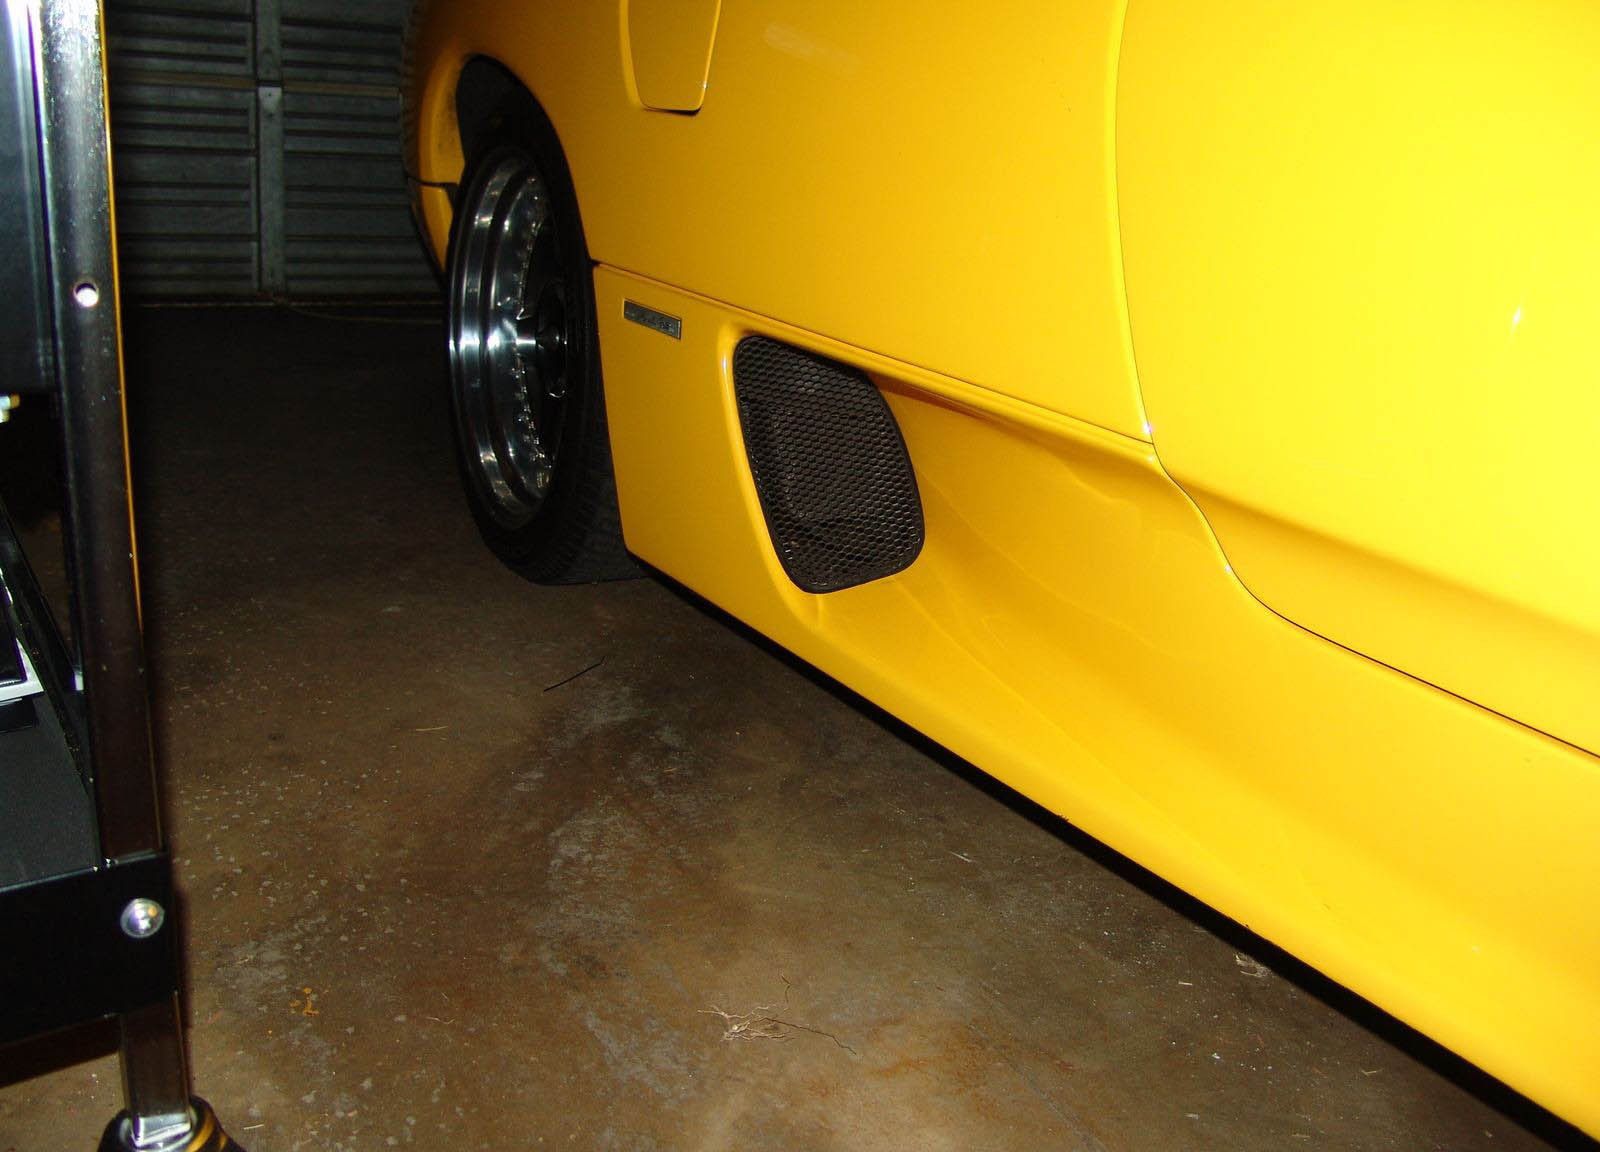 1995 - 2001 Lamborghini Diablo SV